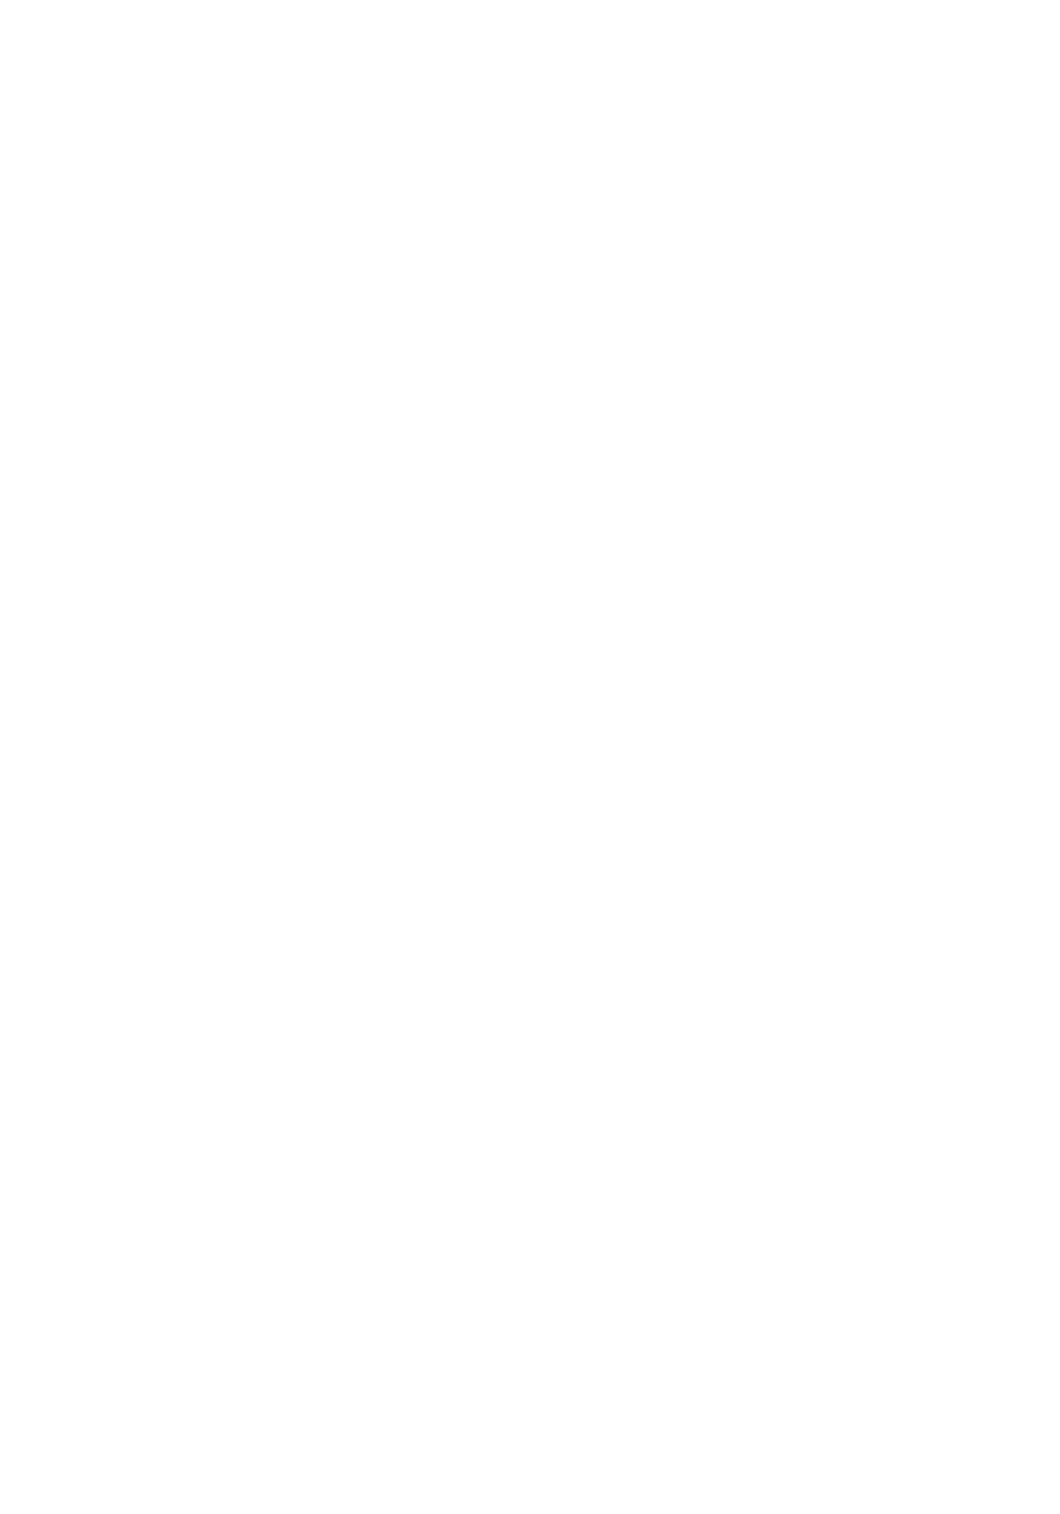 IronNet logo for dark backgrounds (transparent PNG)